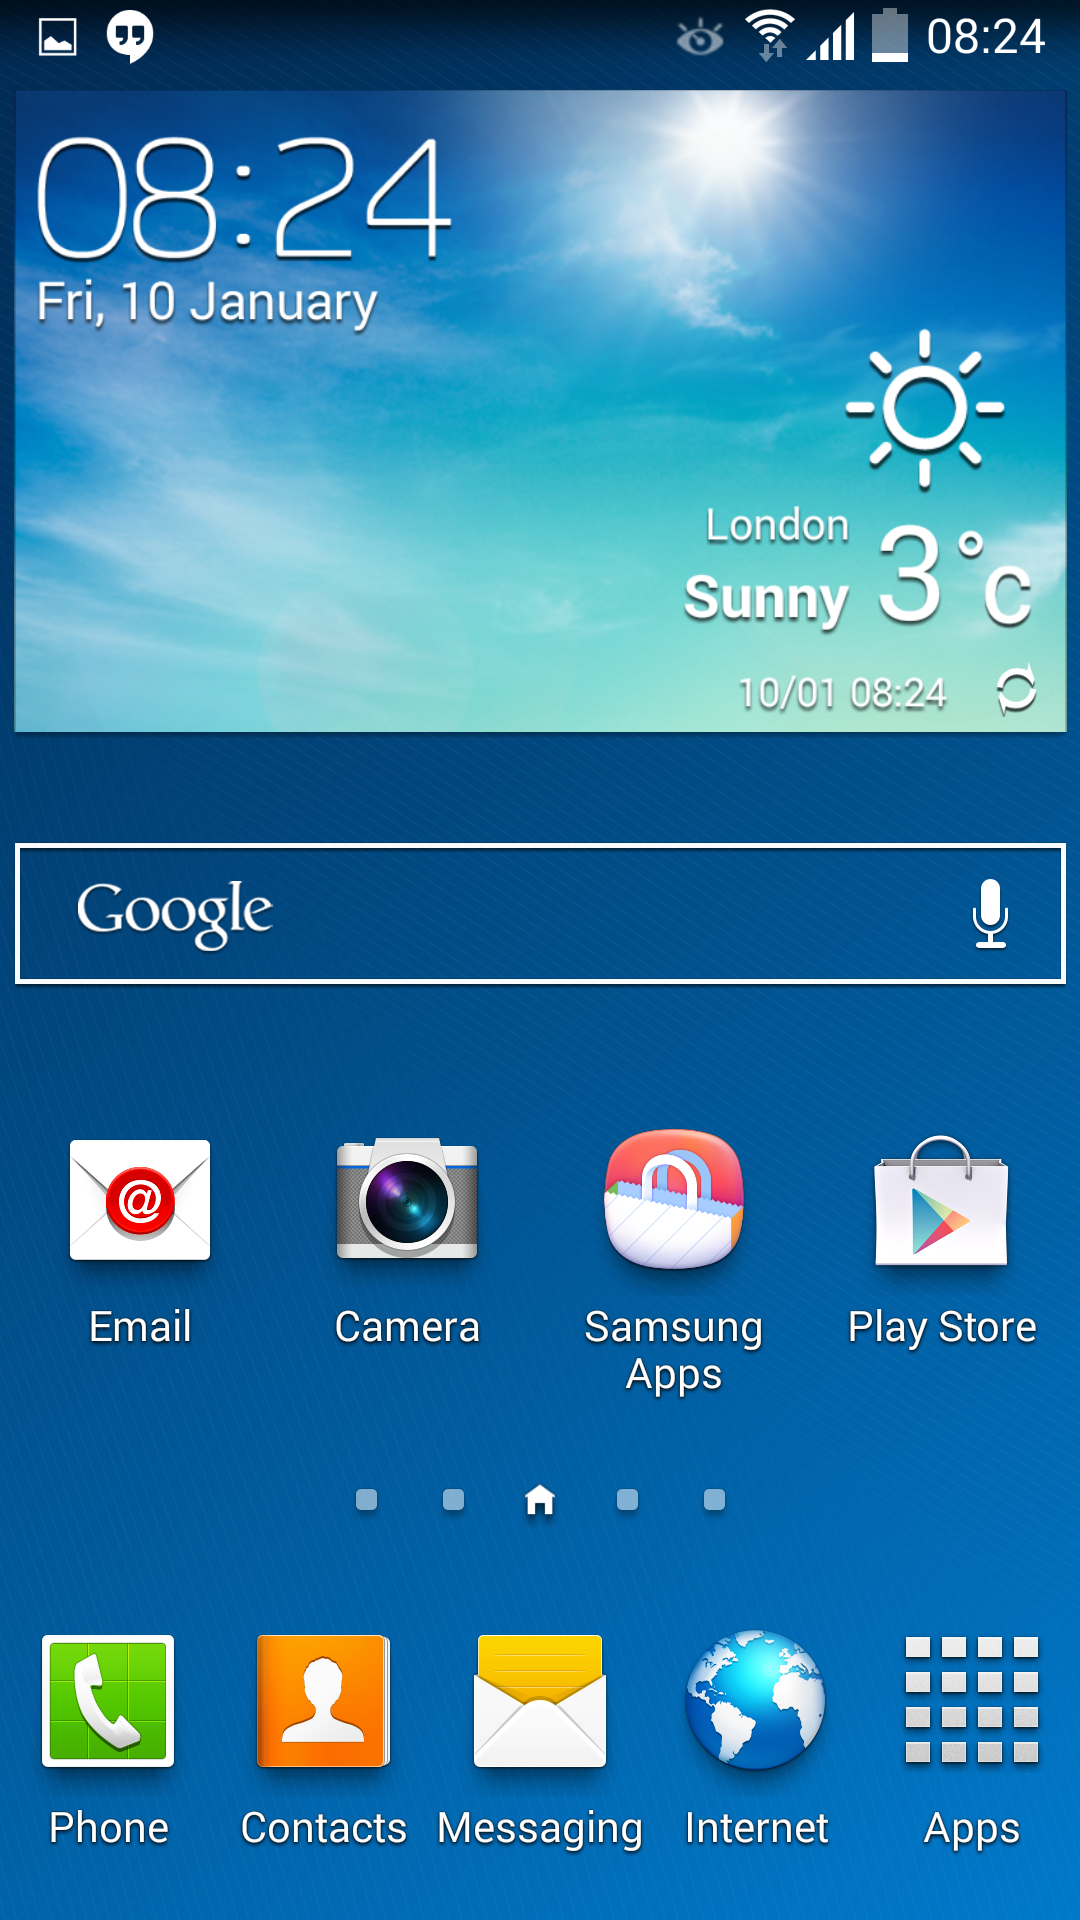 android kitkat status bar icons